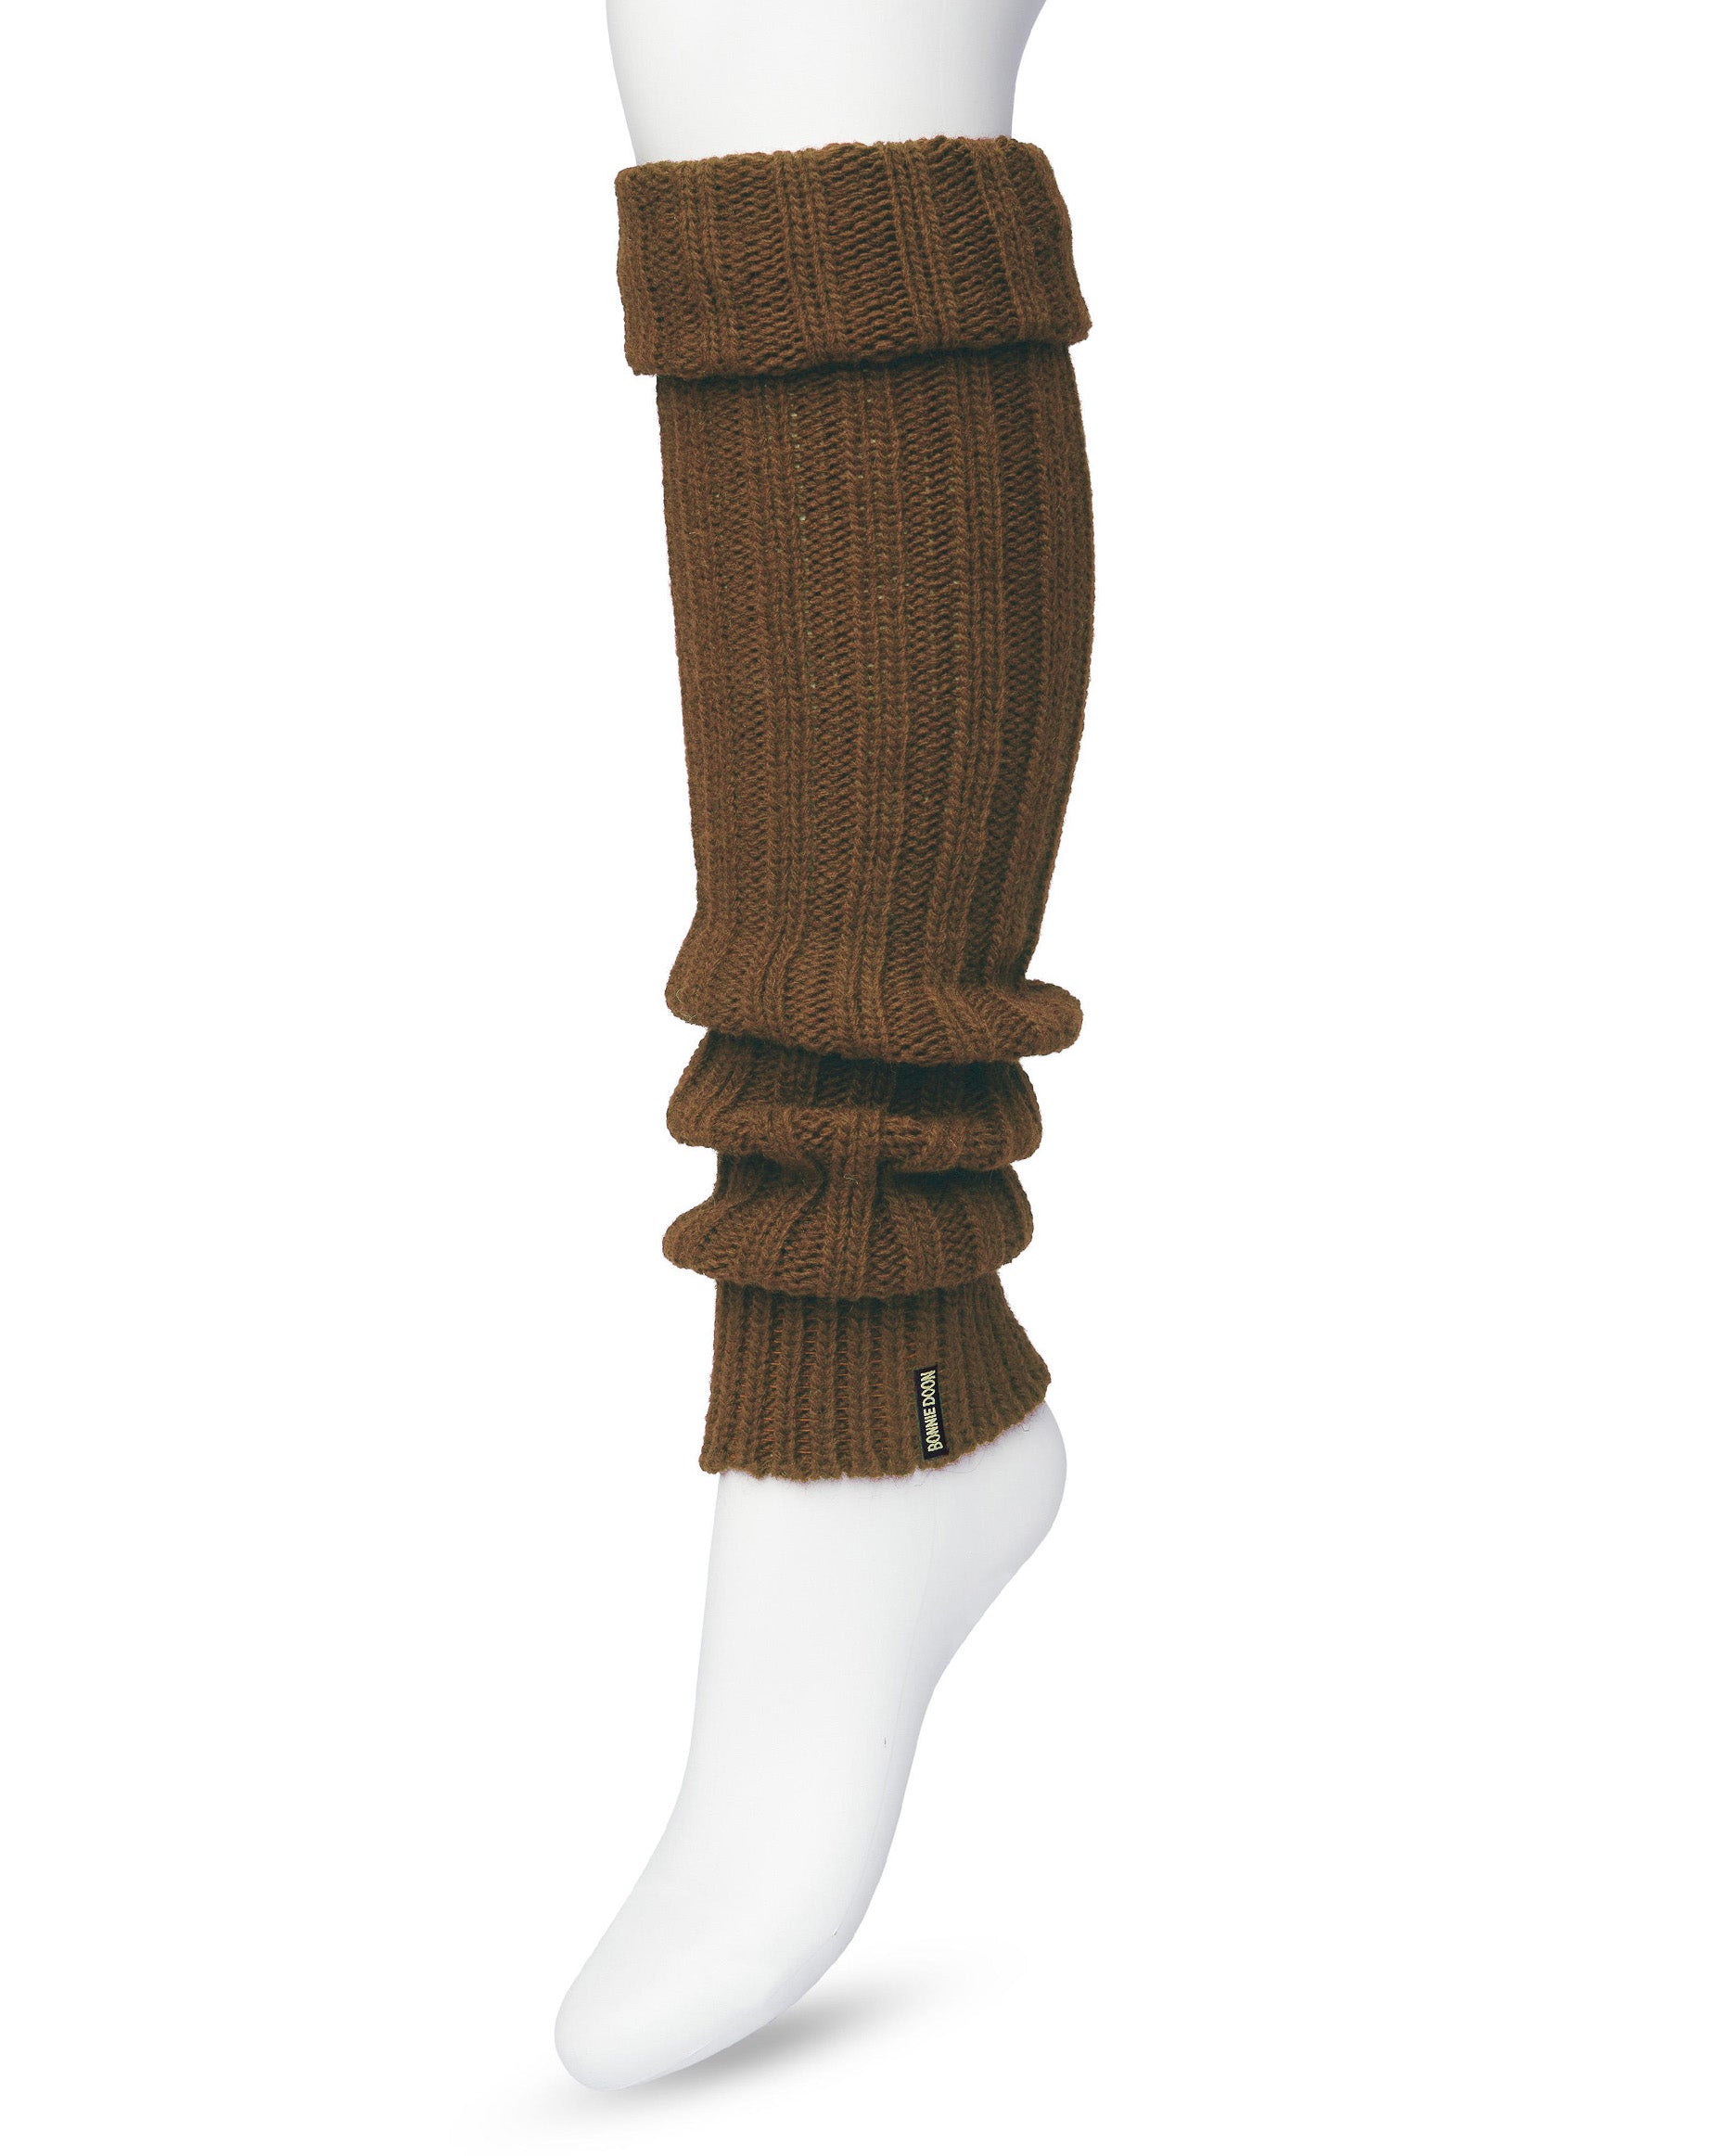 Bonnie Doon Sleever/Legwarmer BE021766 - light brown wool mix chunky knitted leg warmers